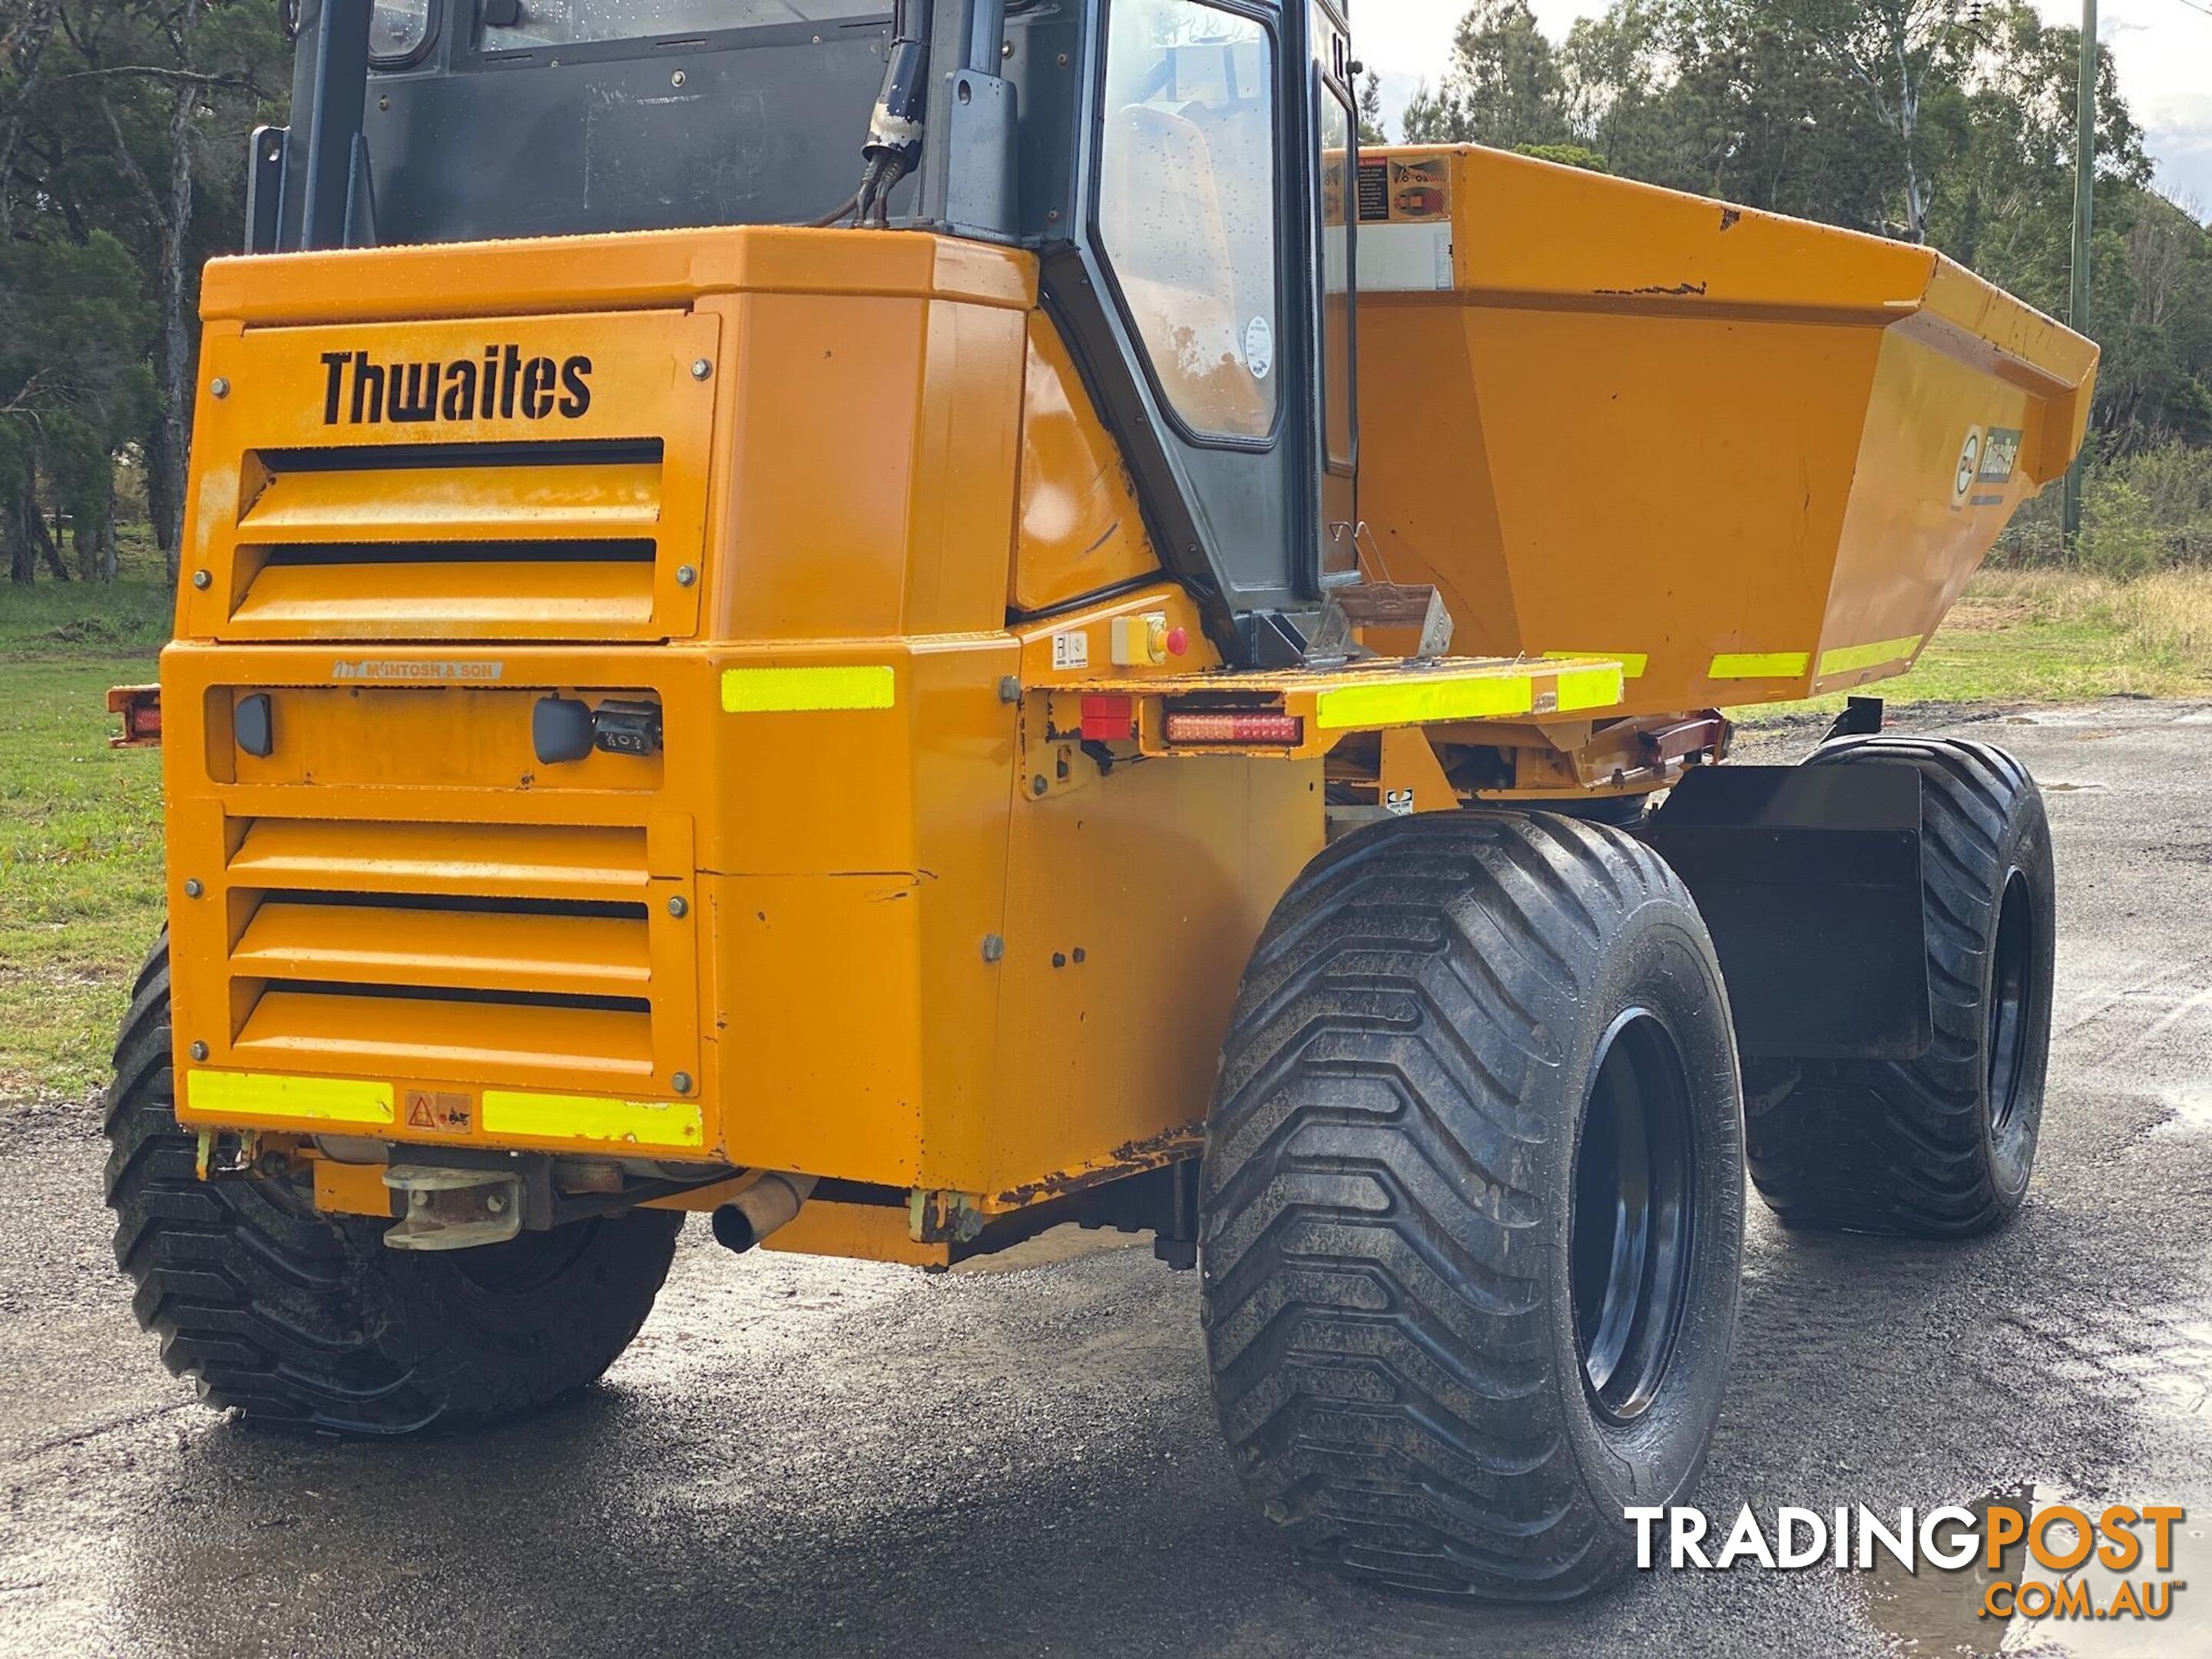 Thwaites 9 Tonnes Articulated Off Highway Truck